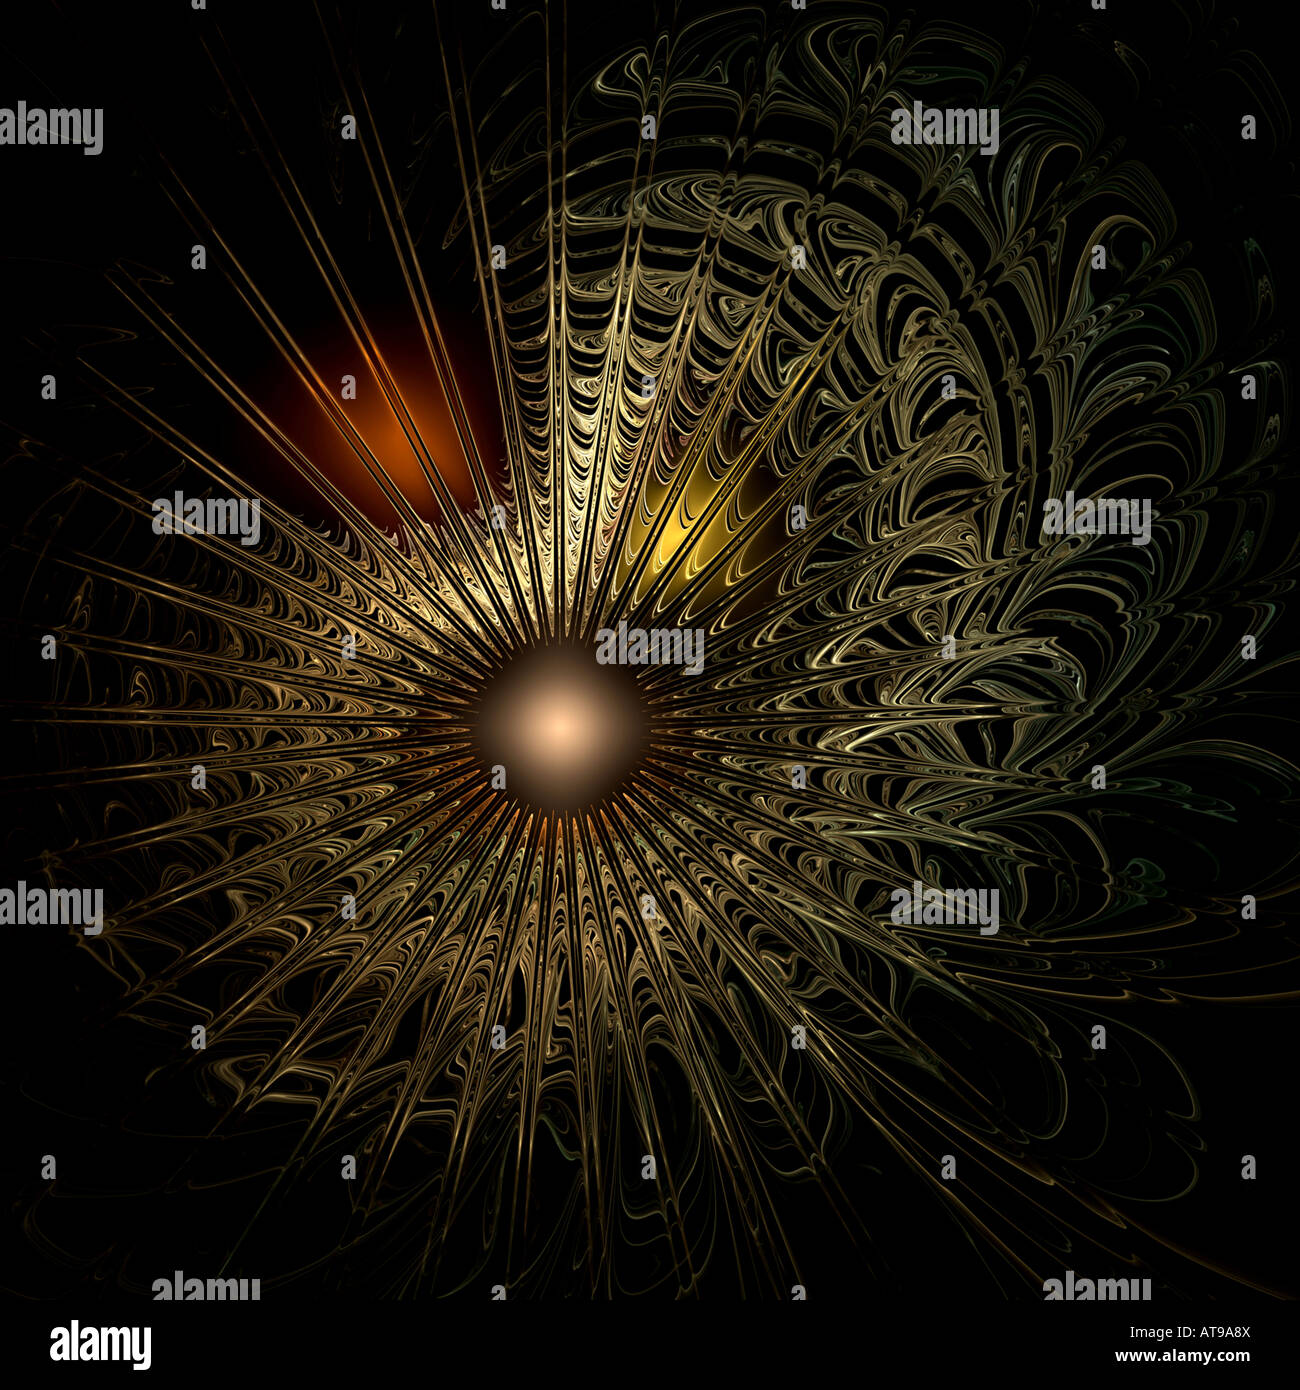 Abstract fractal image resembling the big bang or birth of the universe and galaxies Stock Photo